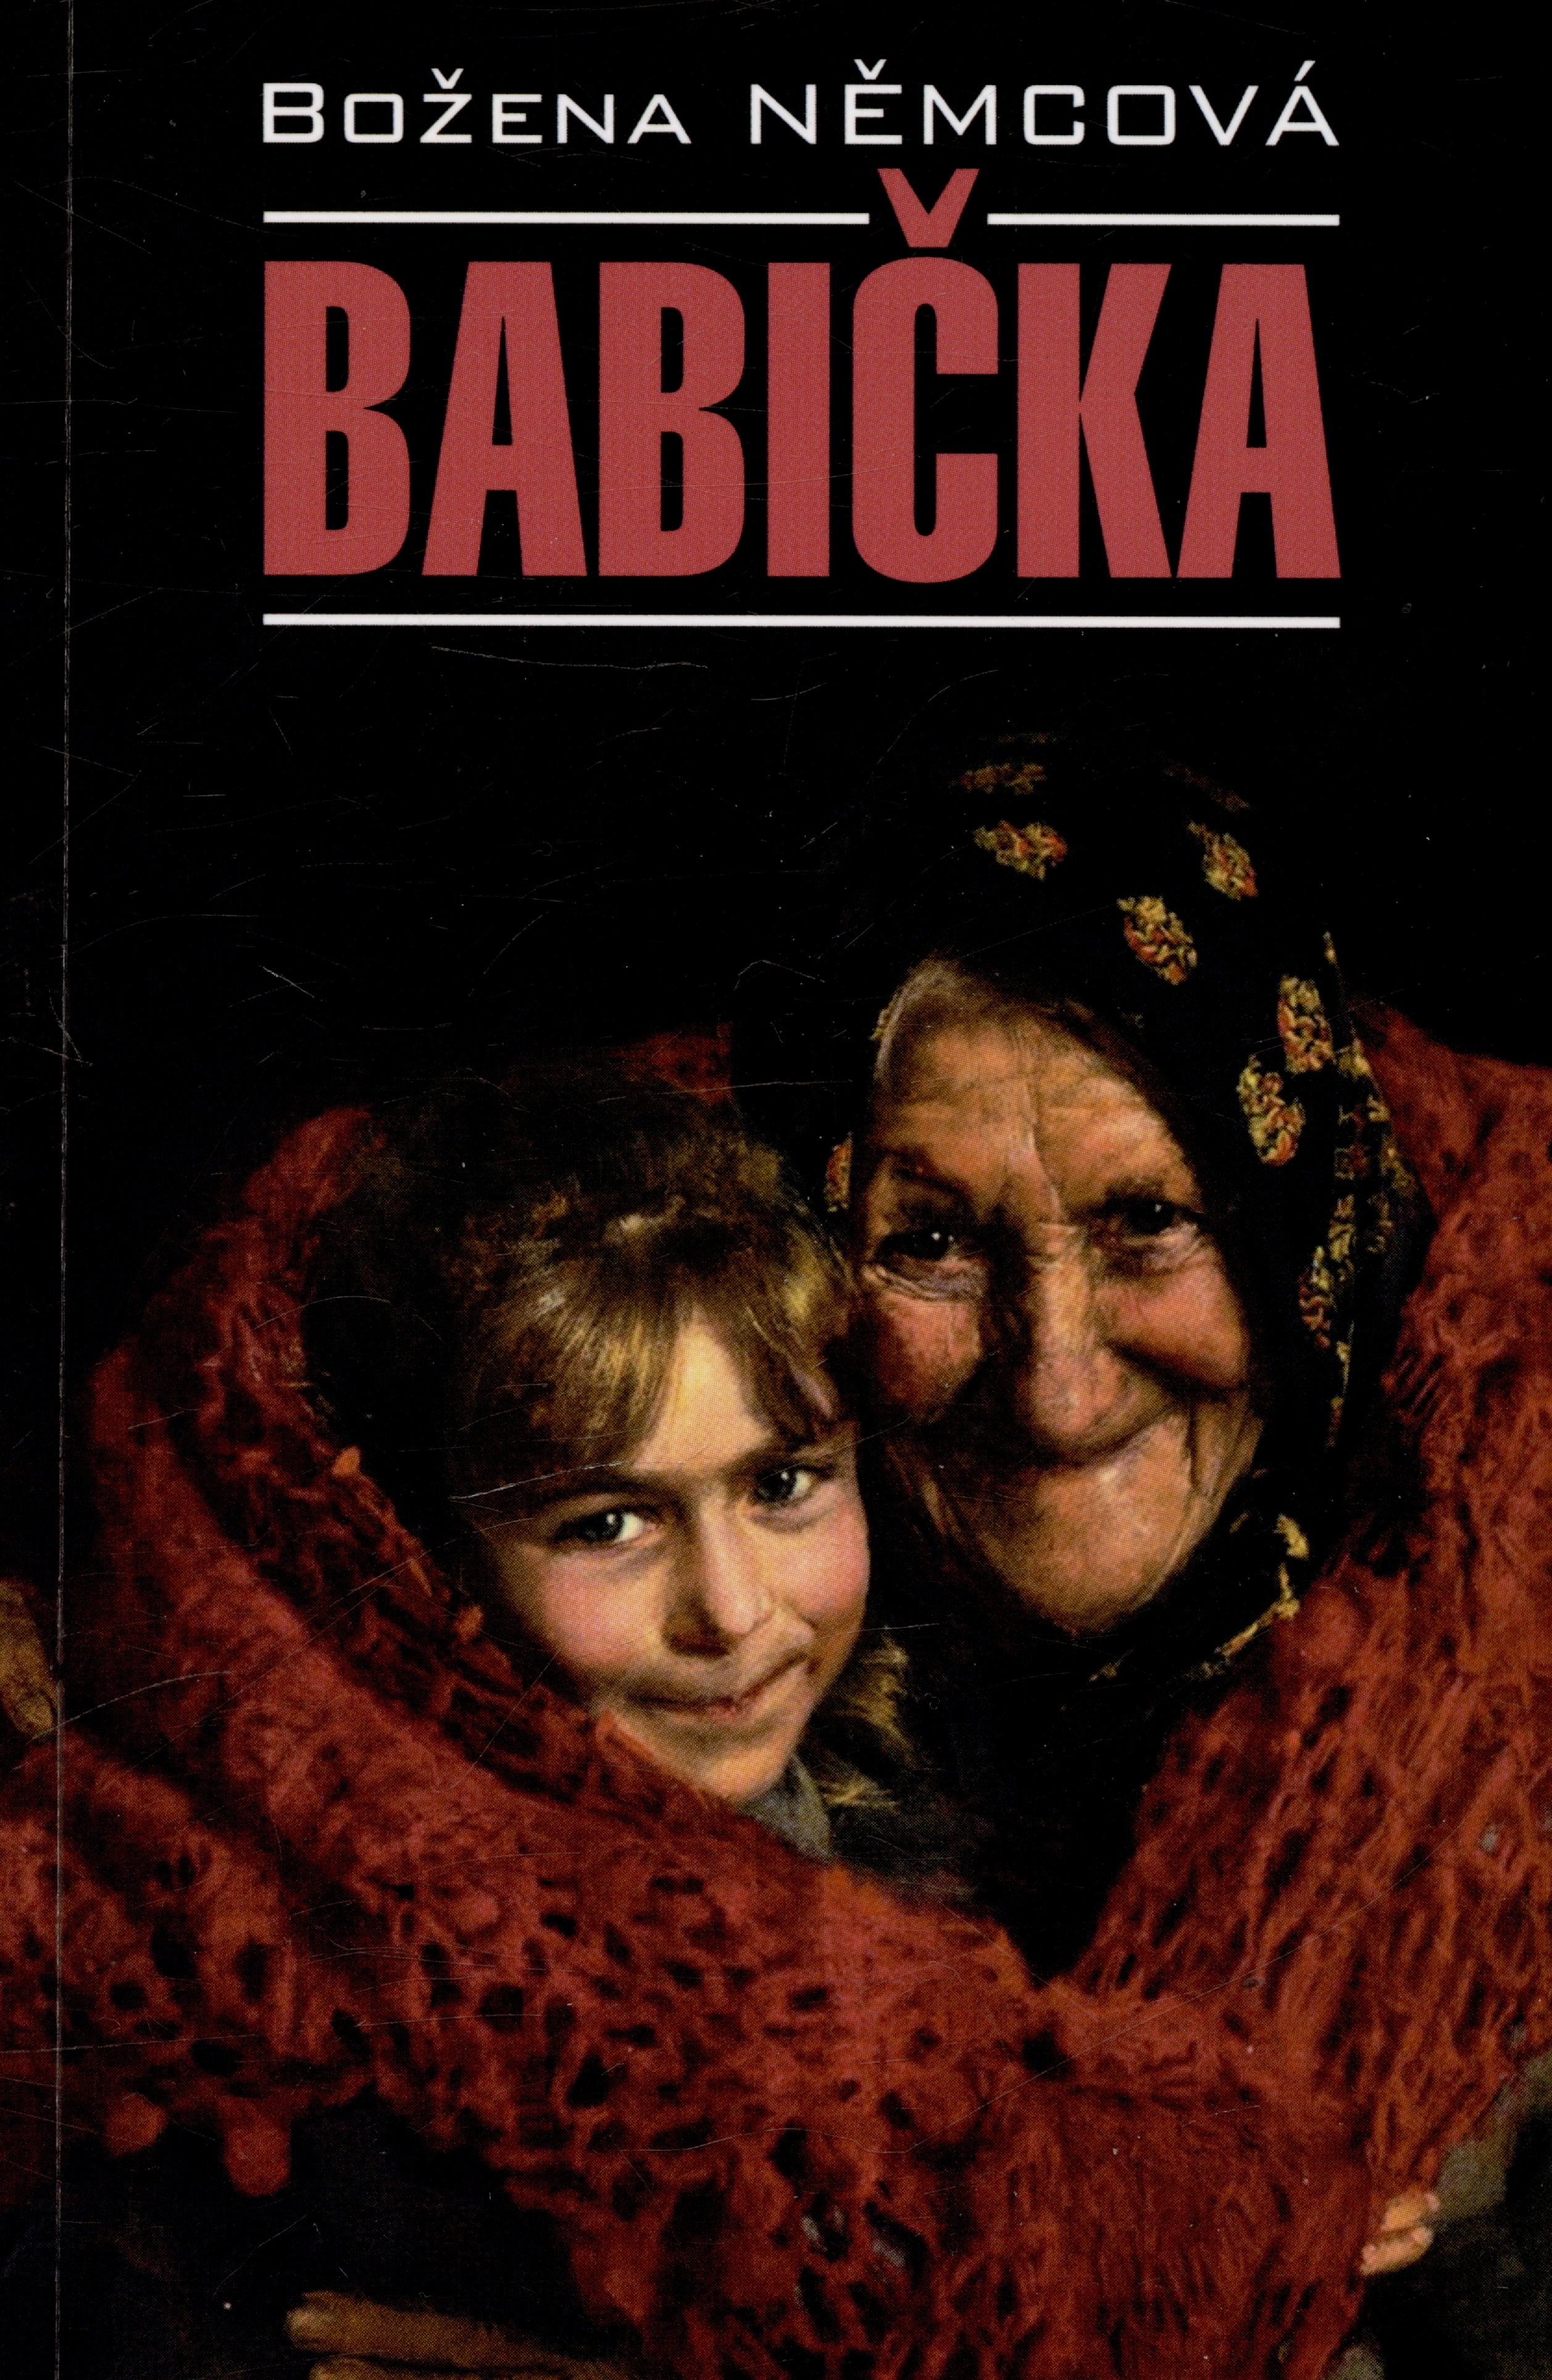 Немцова Божена Babicka / Бабушка ( книга для чтения на чешском языке) hbr s 10 must read